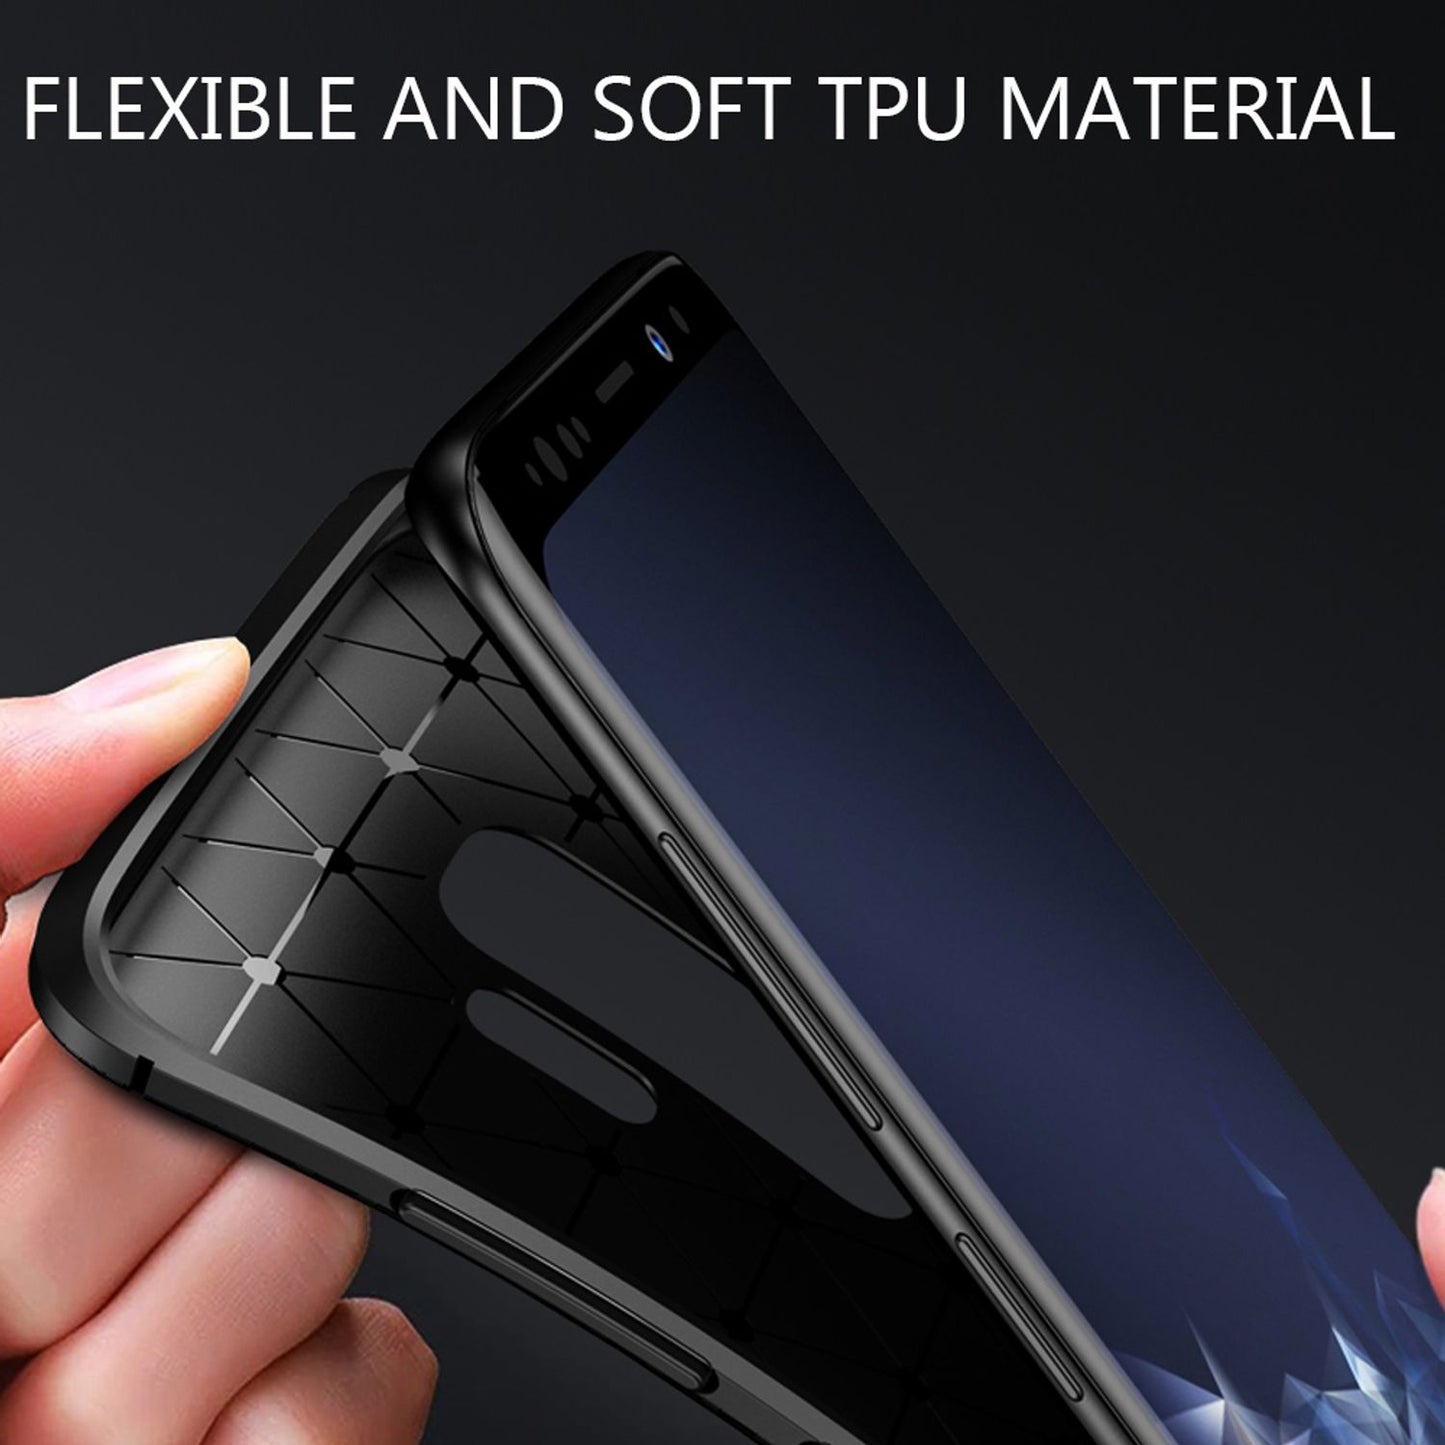 NALIA Handy Hülle für Samsung Galaxy S9 Plus, Slim Silikon Case Cover Etui Skin